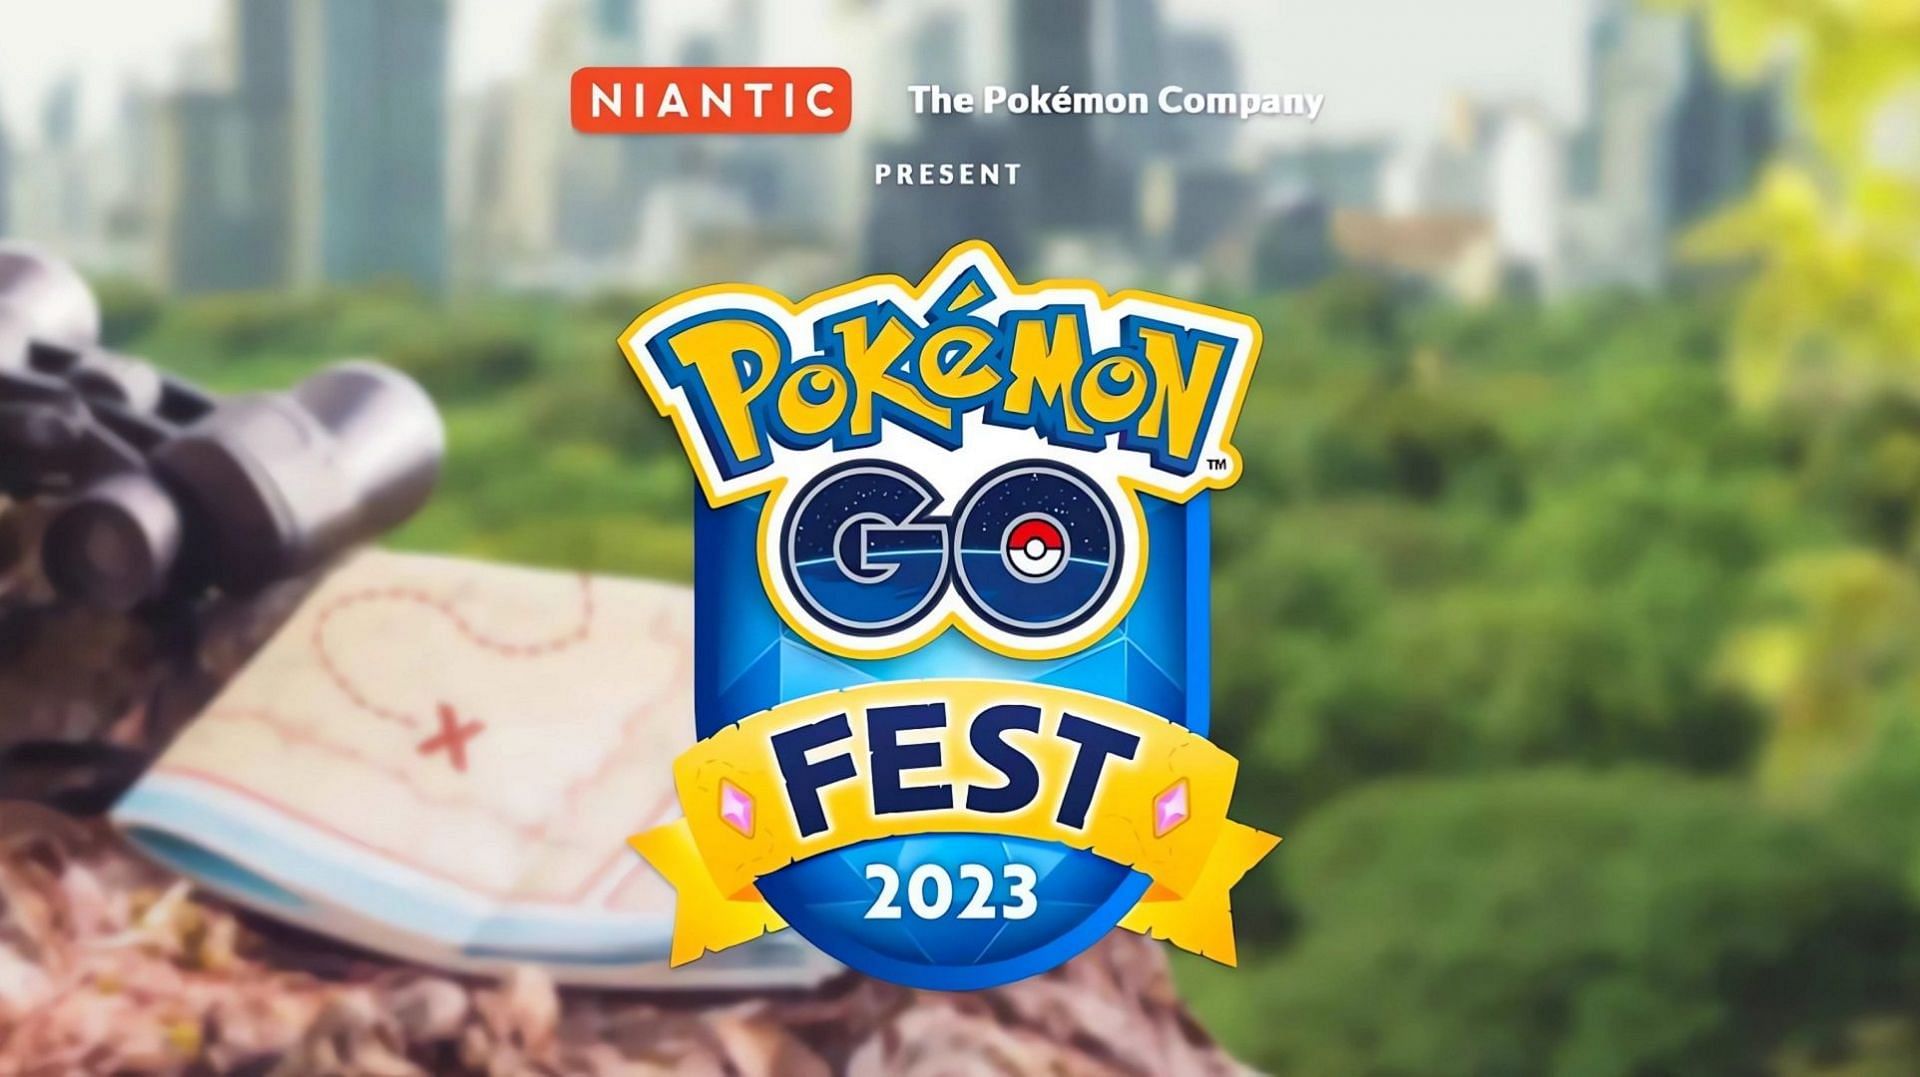 Pokemon GO Fest 2023 begins in-person on August 4, 2023.